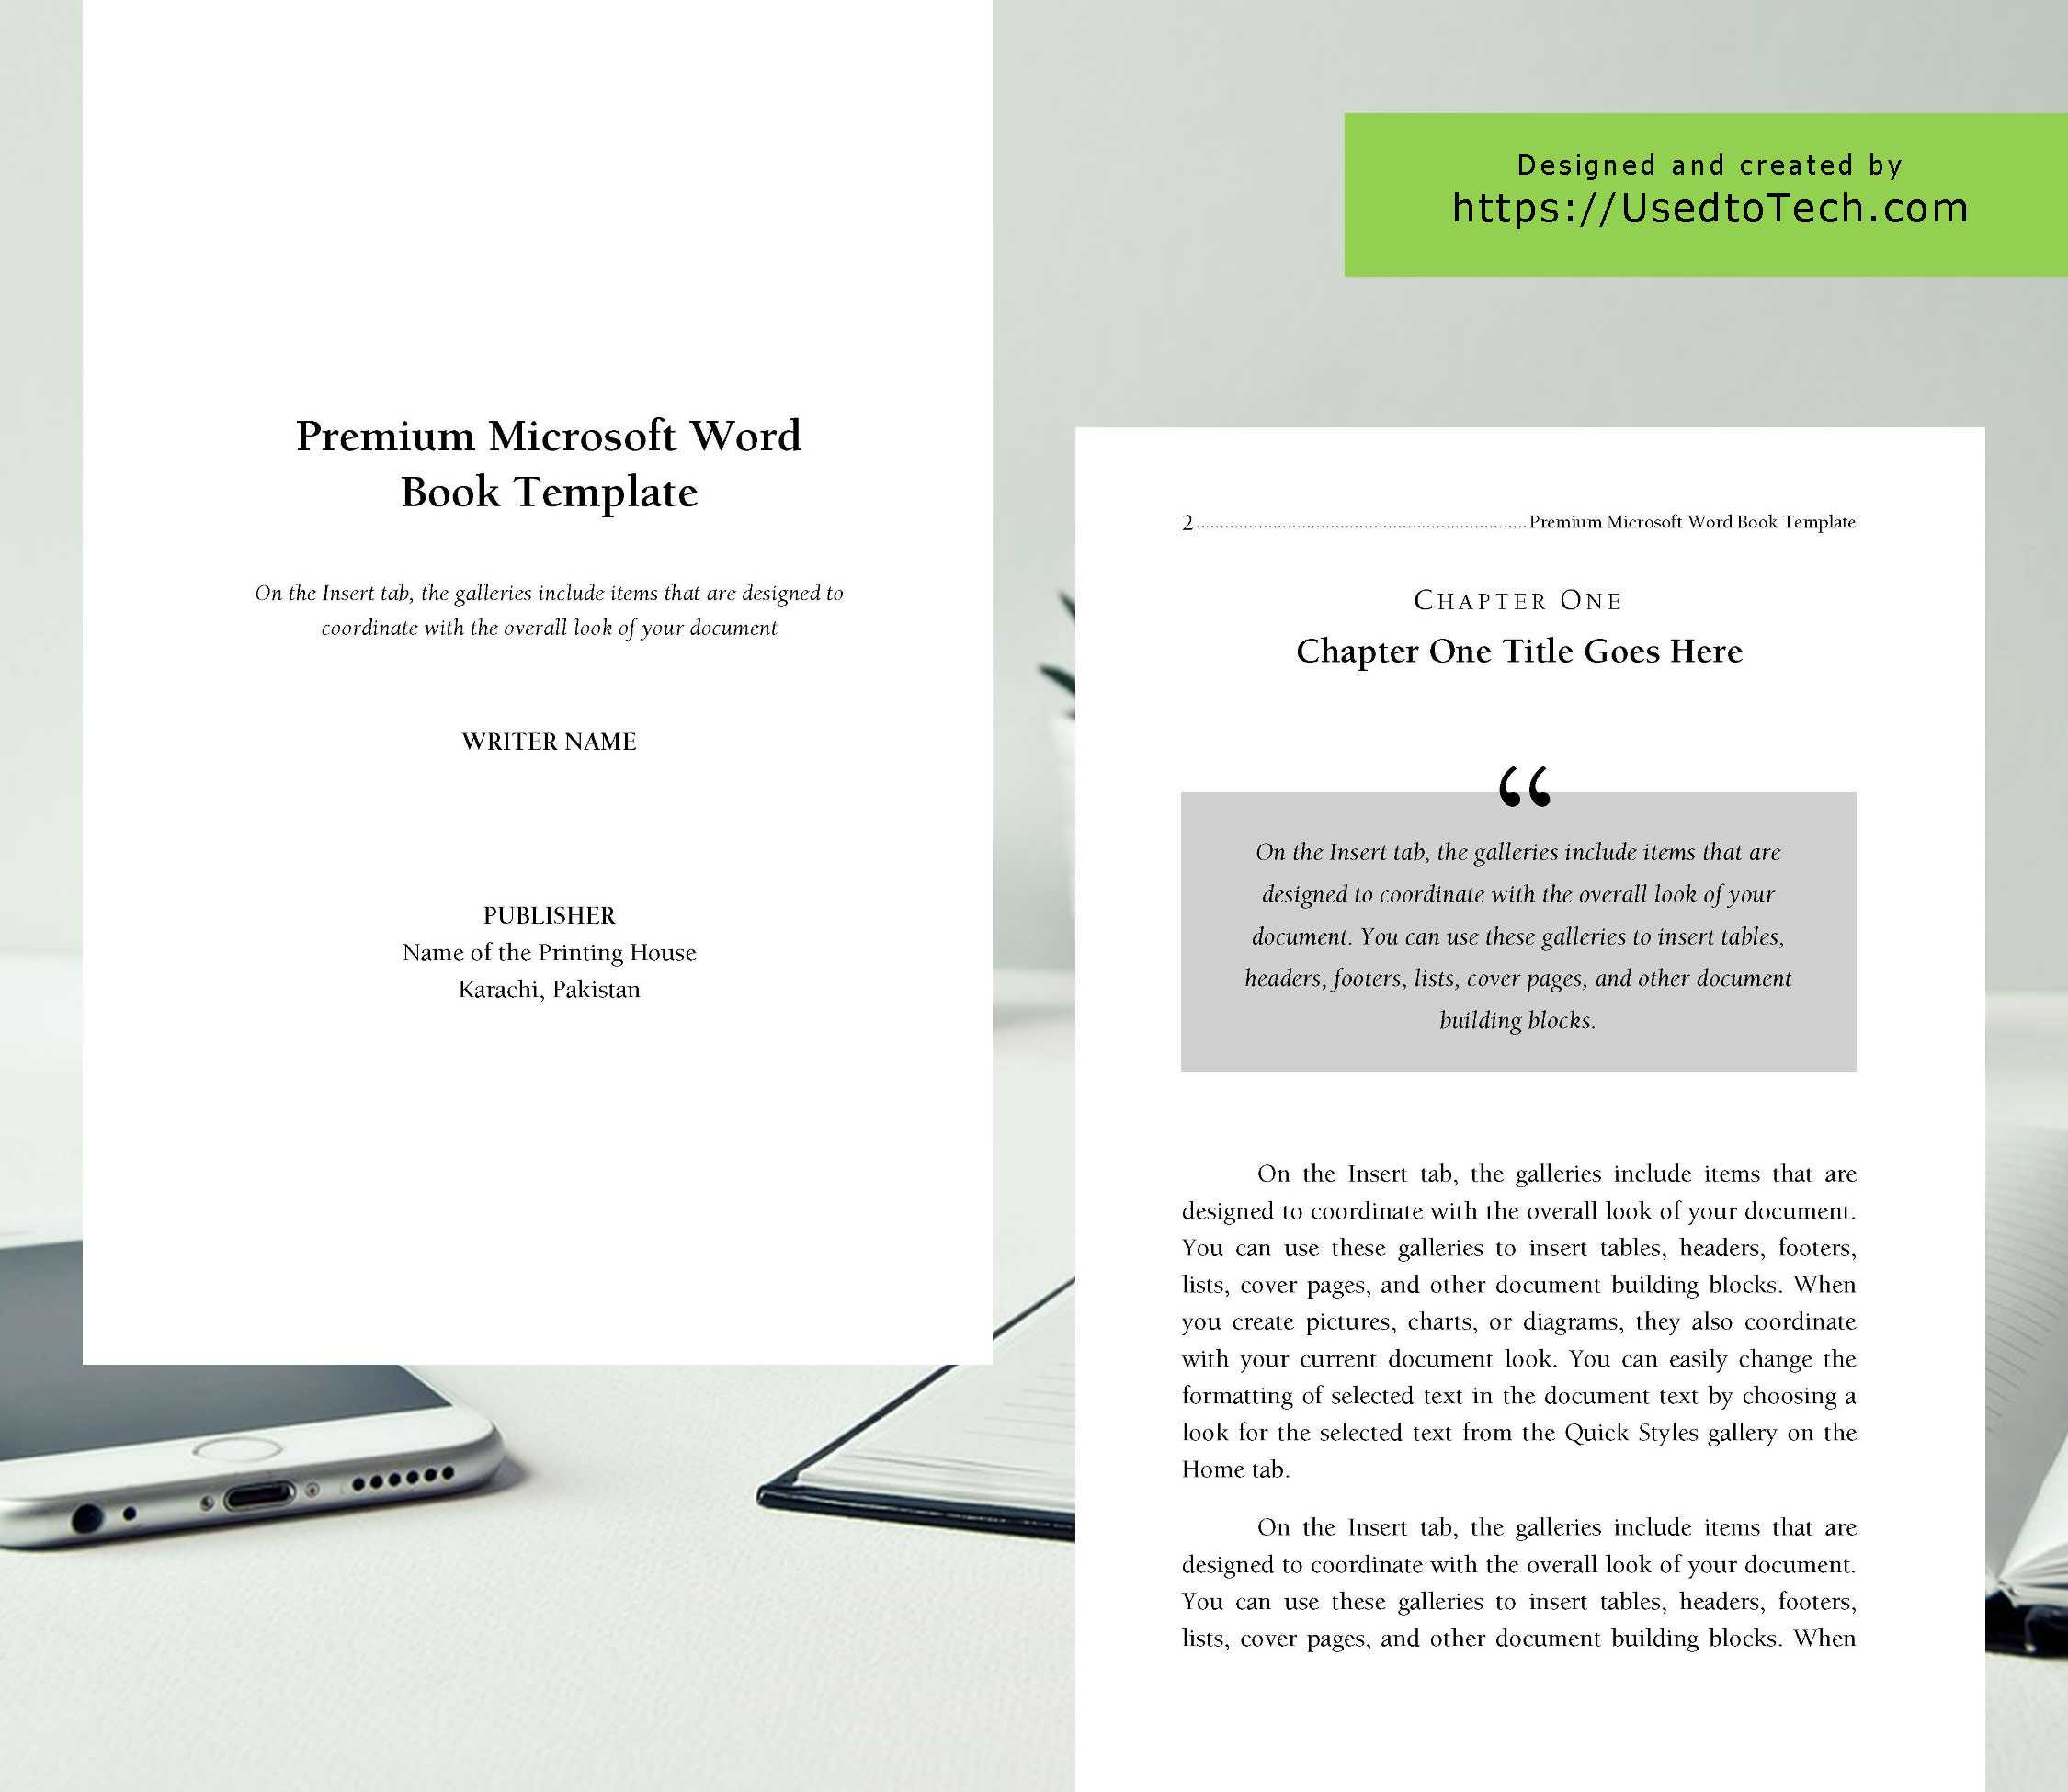 Premium & Free 6 X 9 Book Template For Microsoft Word – Used Intended For 6X9 Book Template For Word